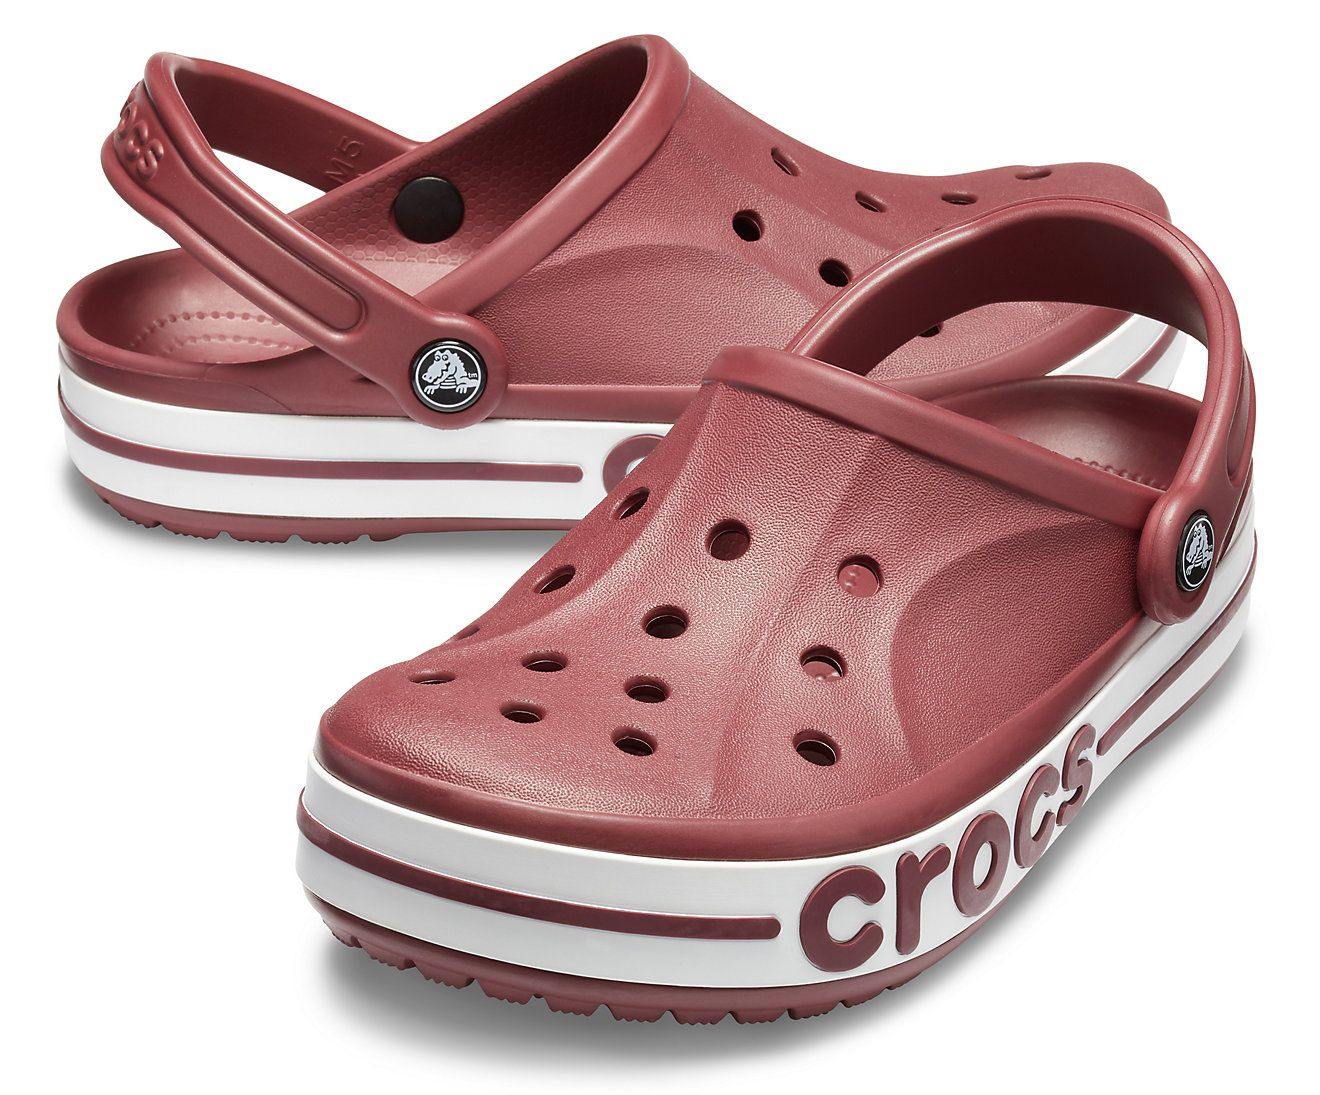 Authentic Crocs Classic Bae Clog for Women, mStore.Kh